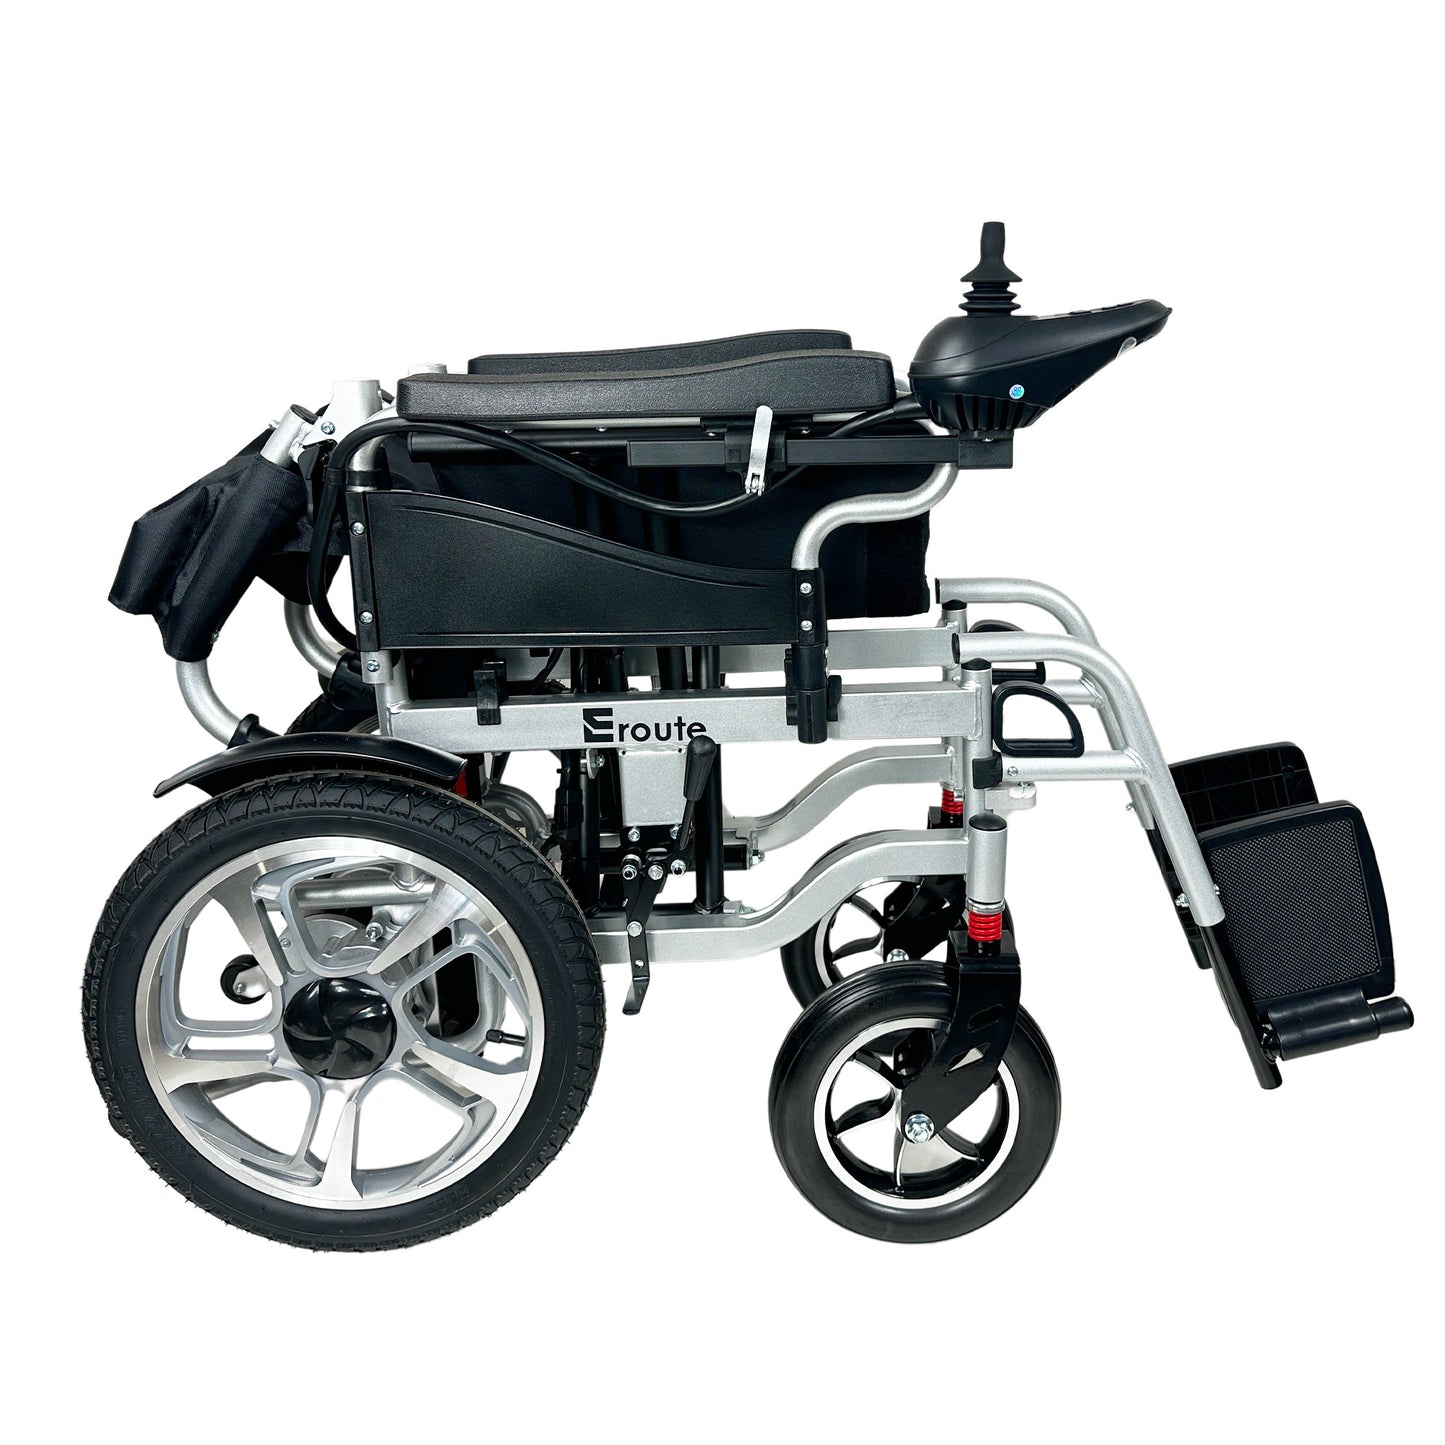 6003A electric wheelchair